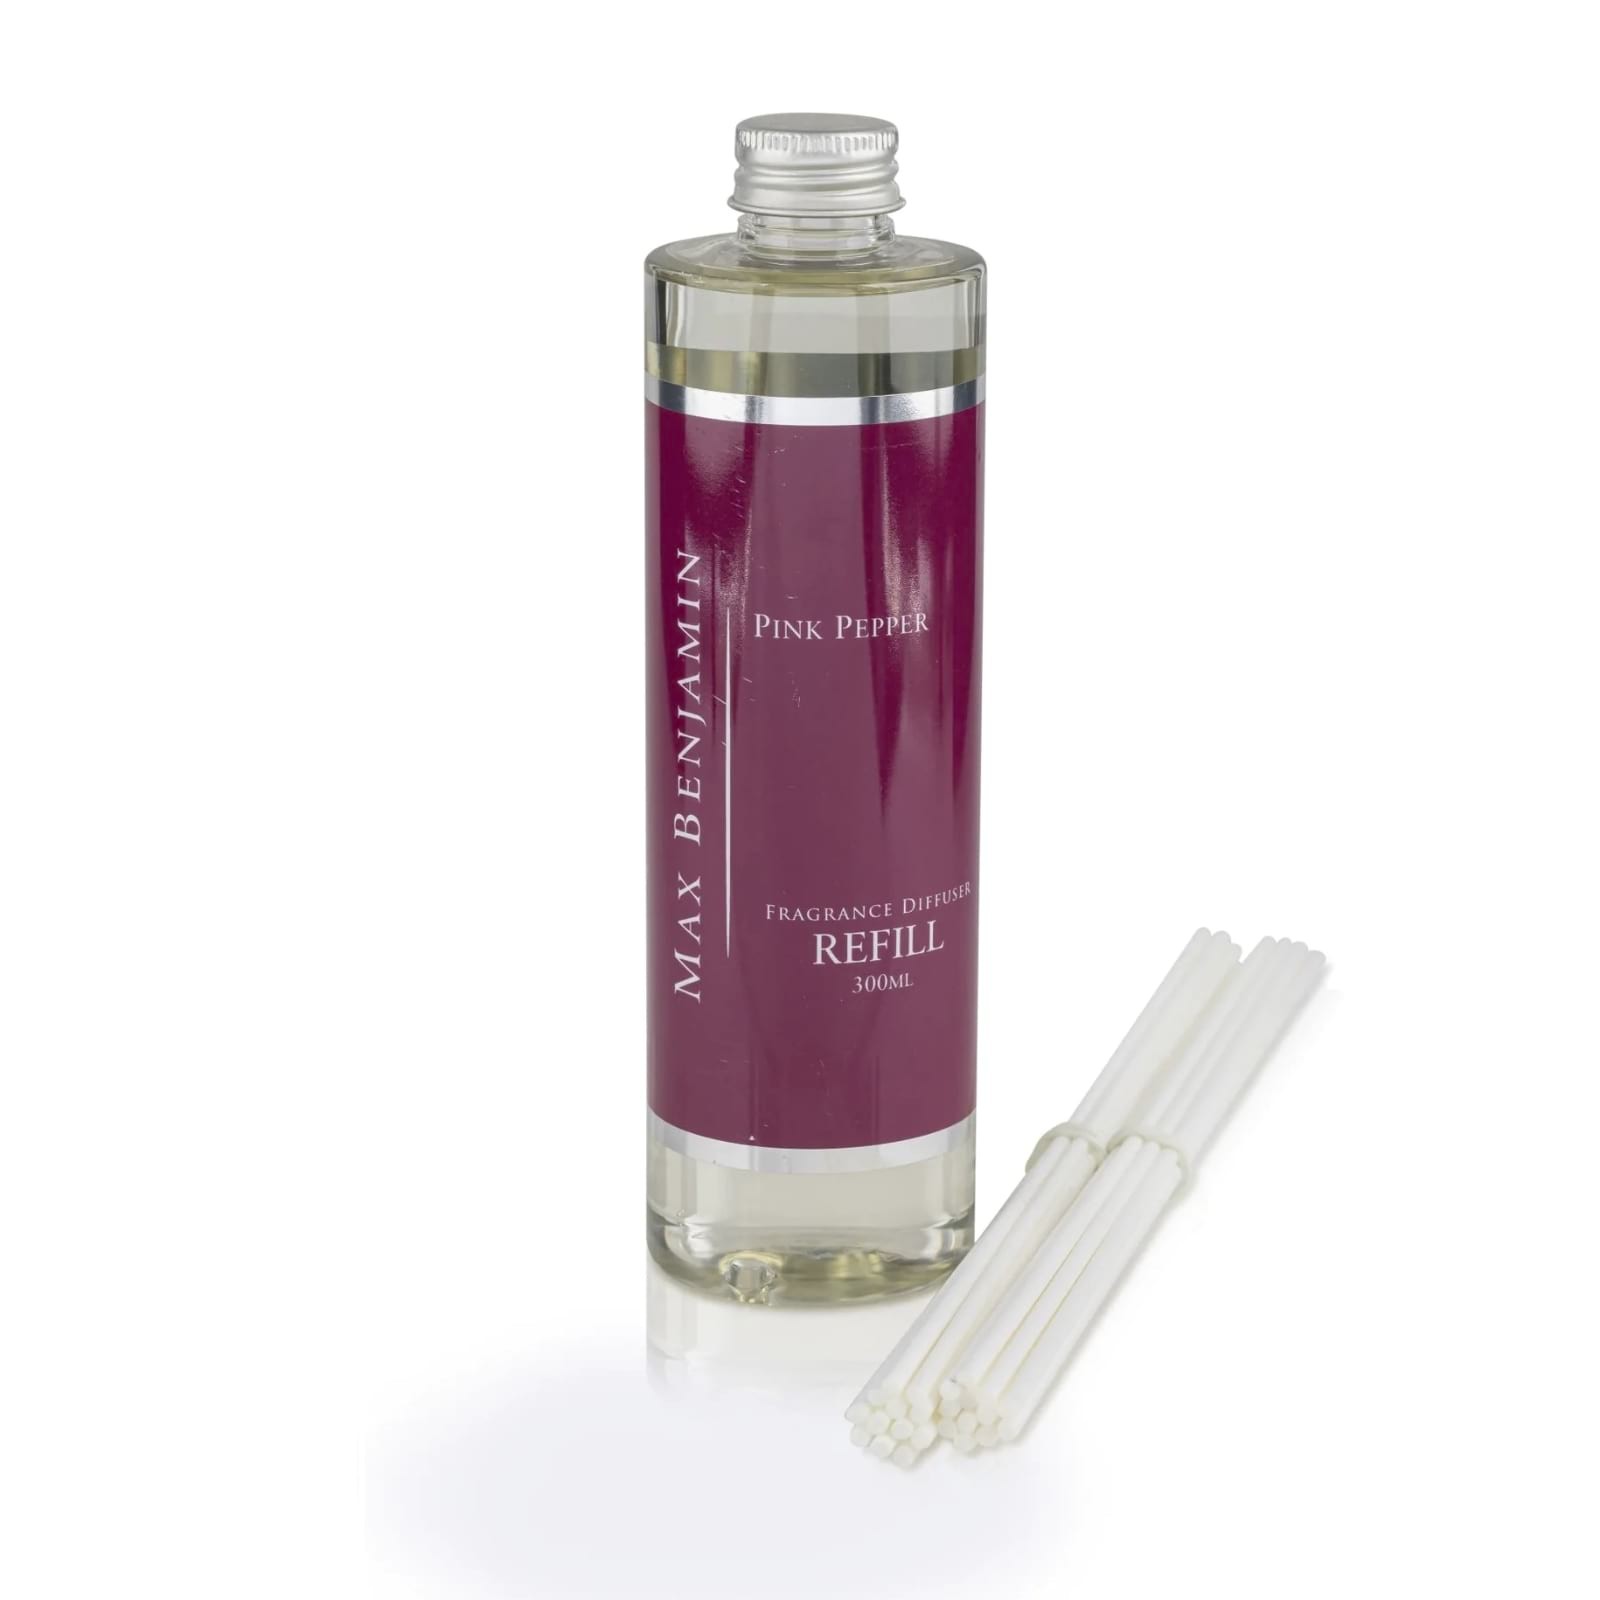 Pink Pepper Luxury Fragrance Diffuser Refill 300ml - Max Benjamin